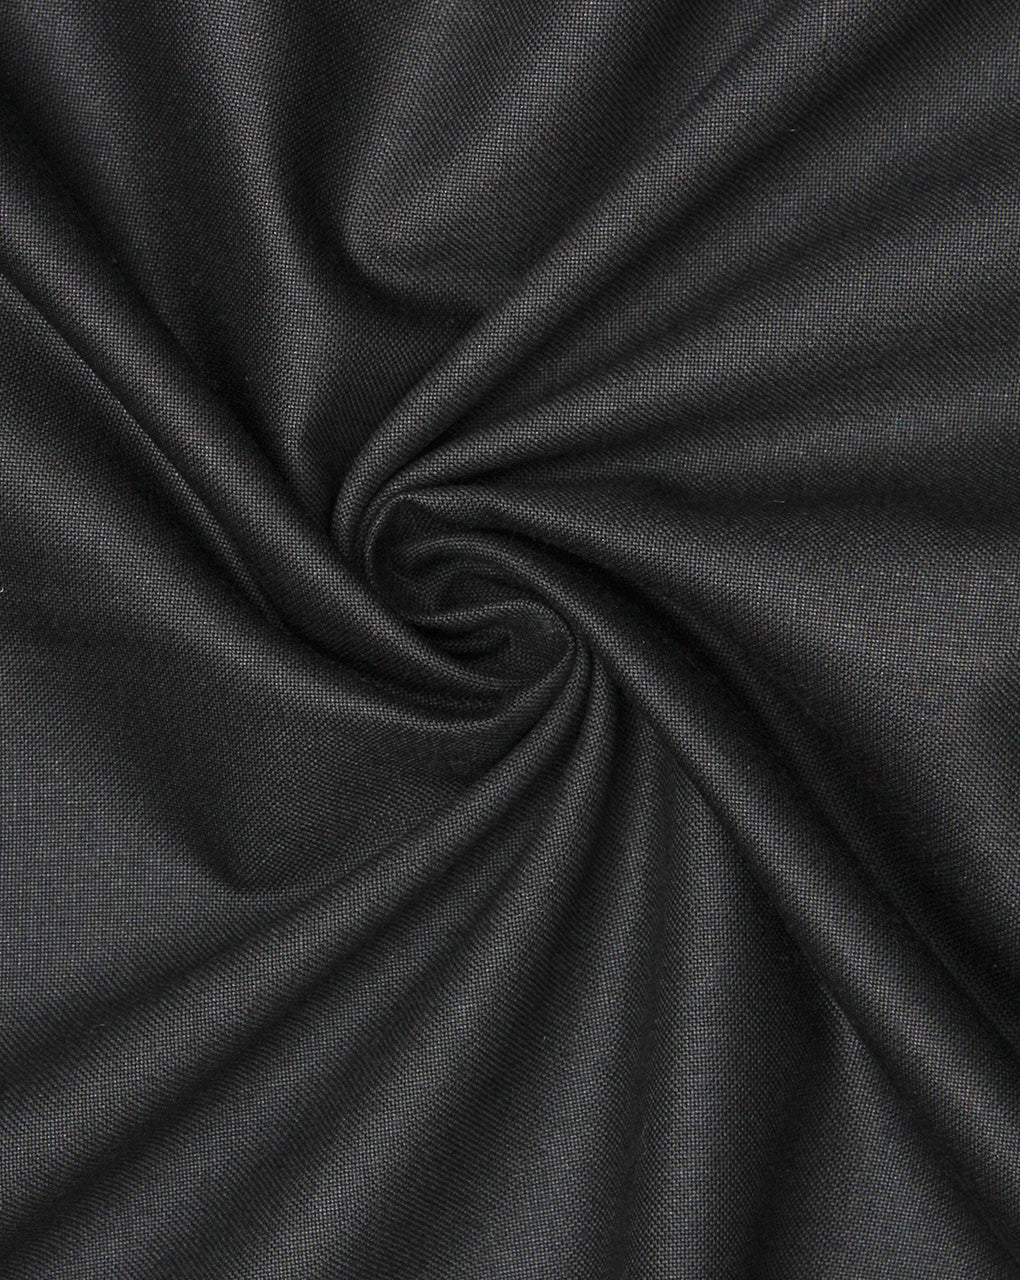 Plain Black Acrylic Woolen Fabric